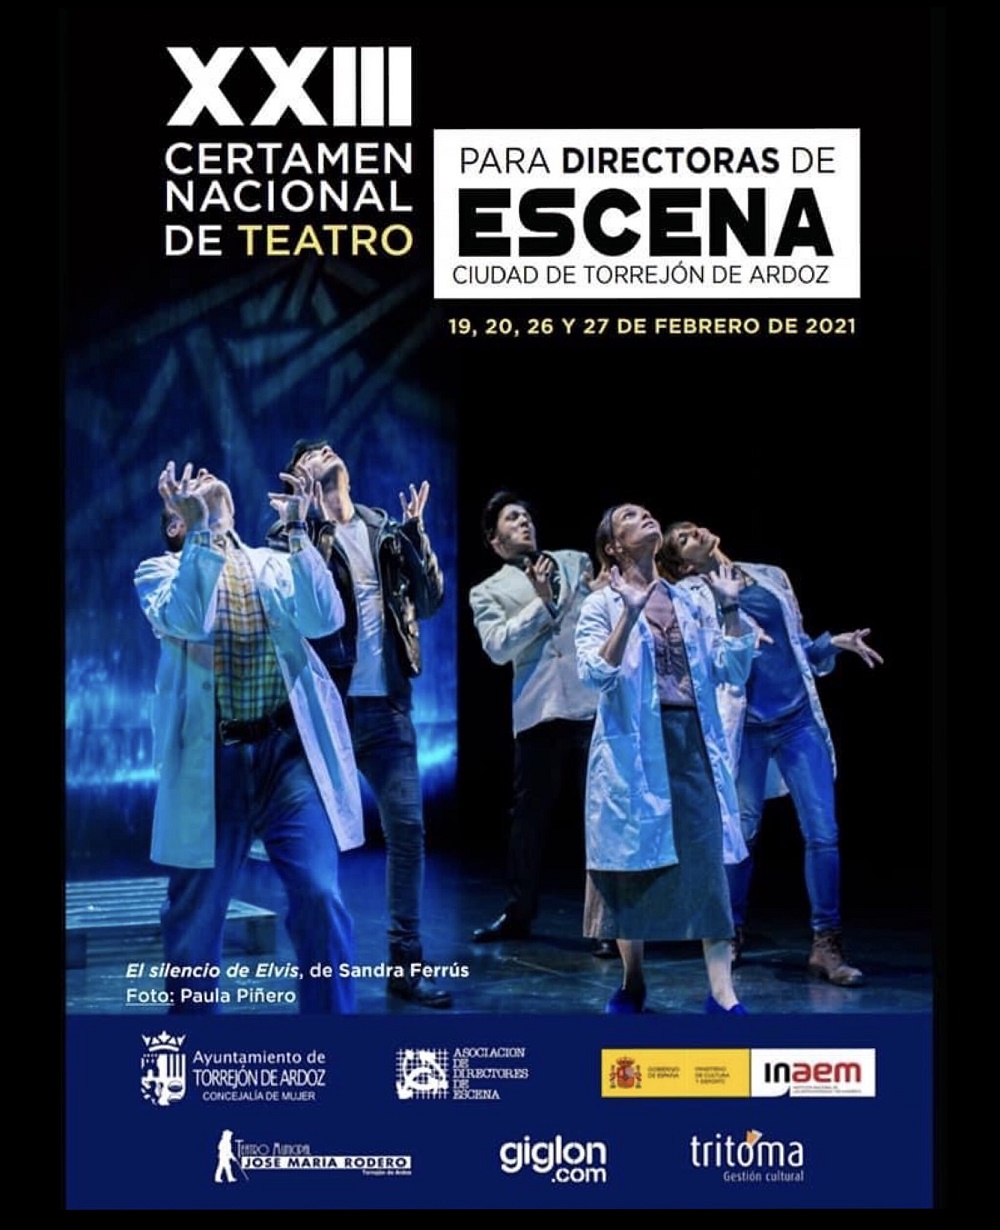 XXIII Certamen Nacional de Teatro para Directoras de Escena